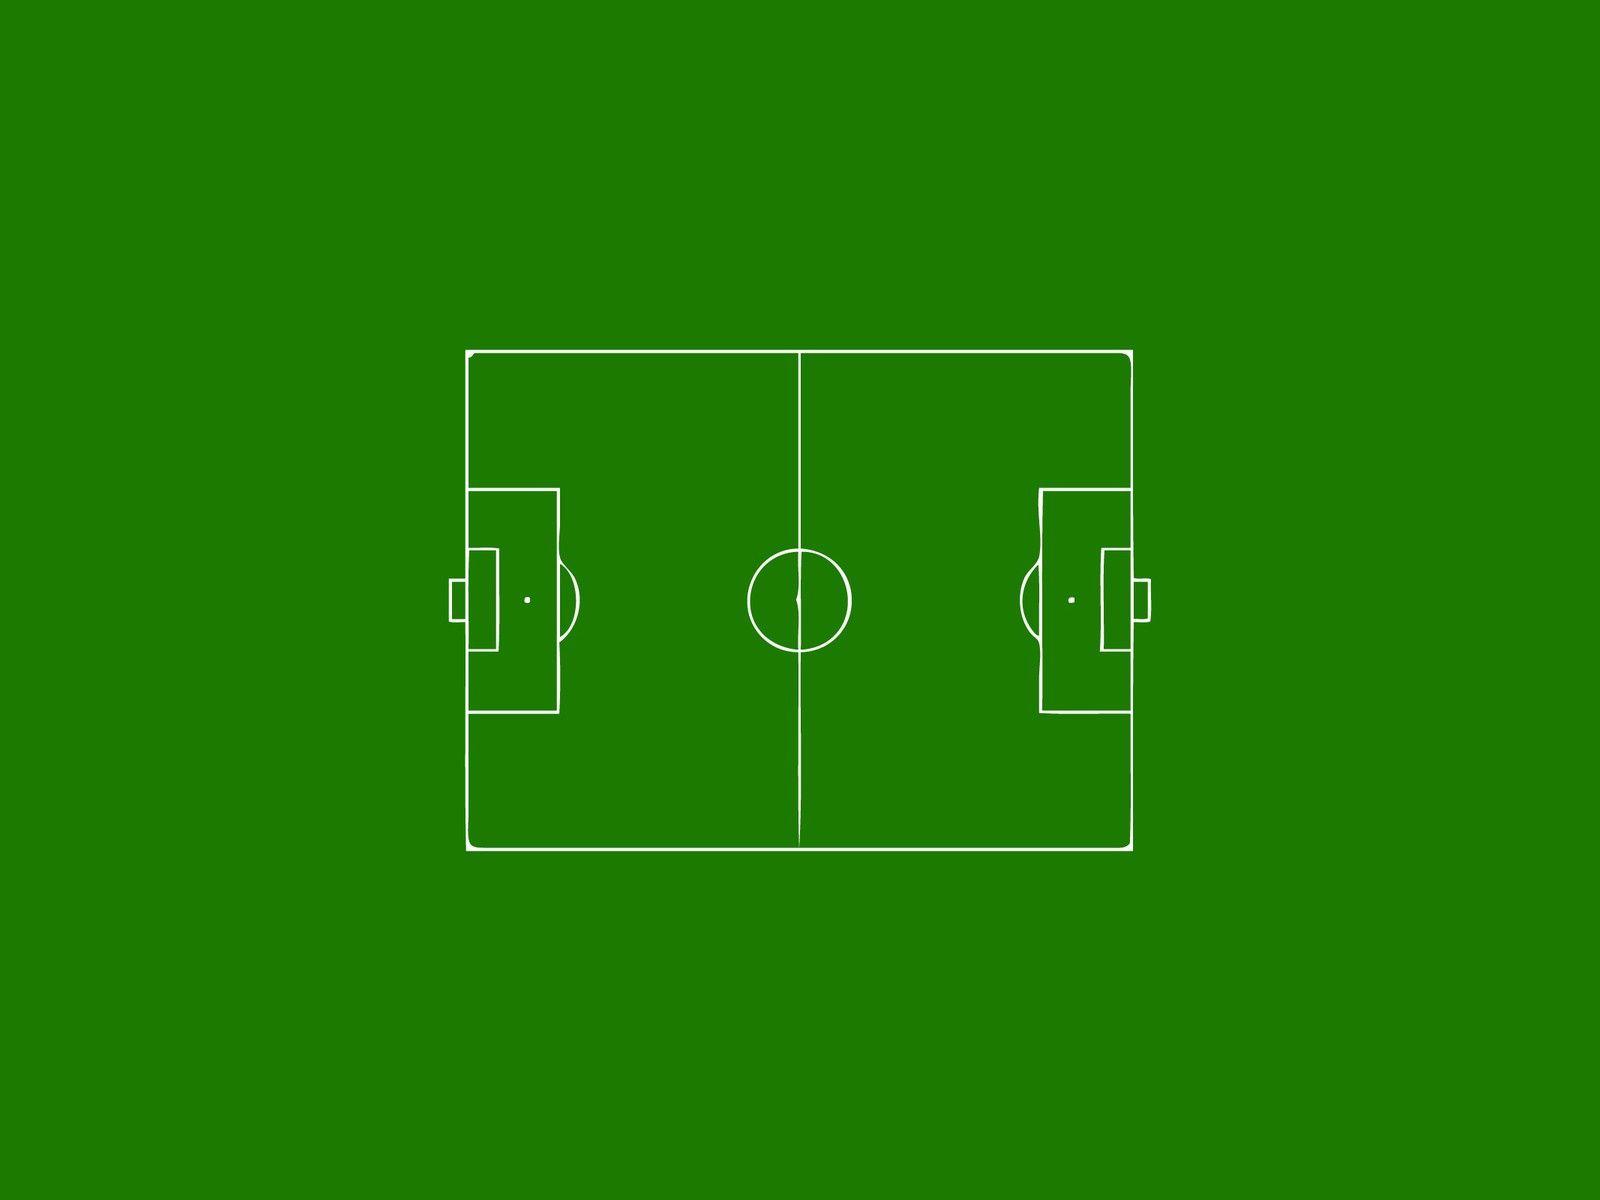 Fields football field minimalistic soccer wallpaper. AllWallpaper